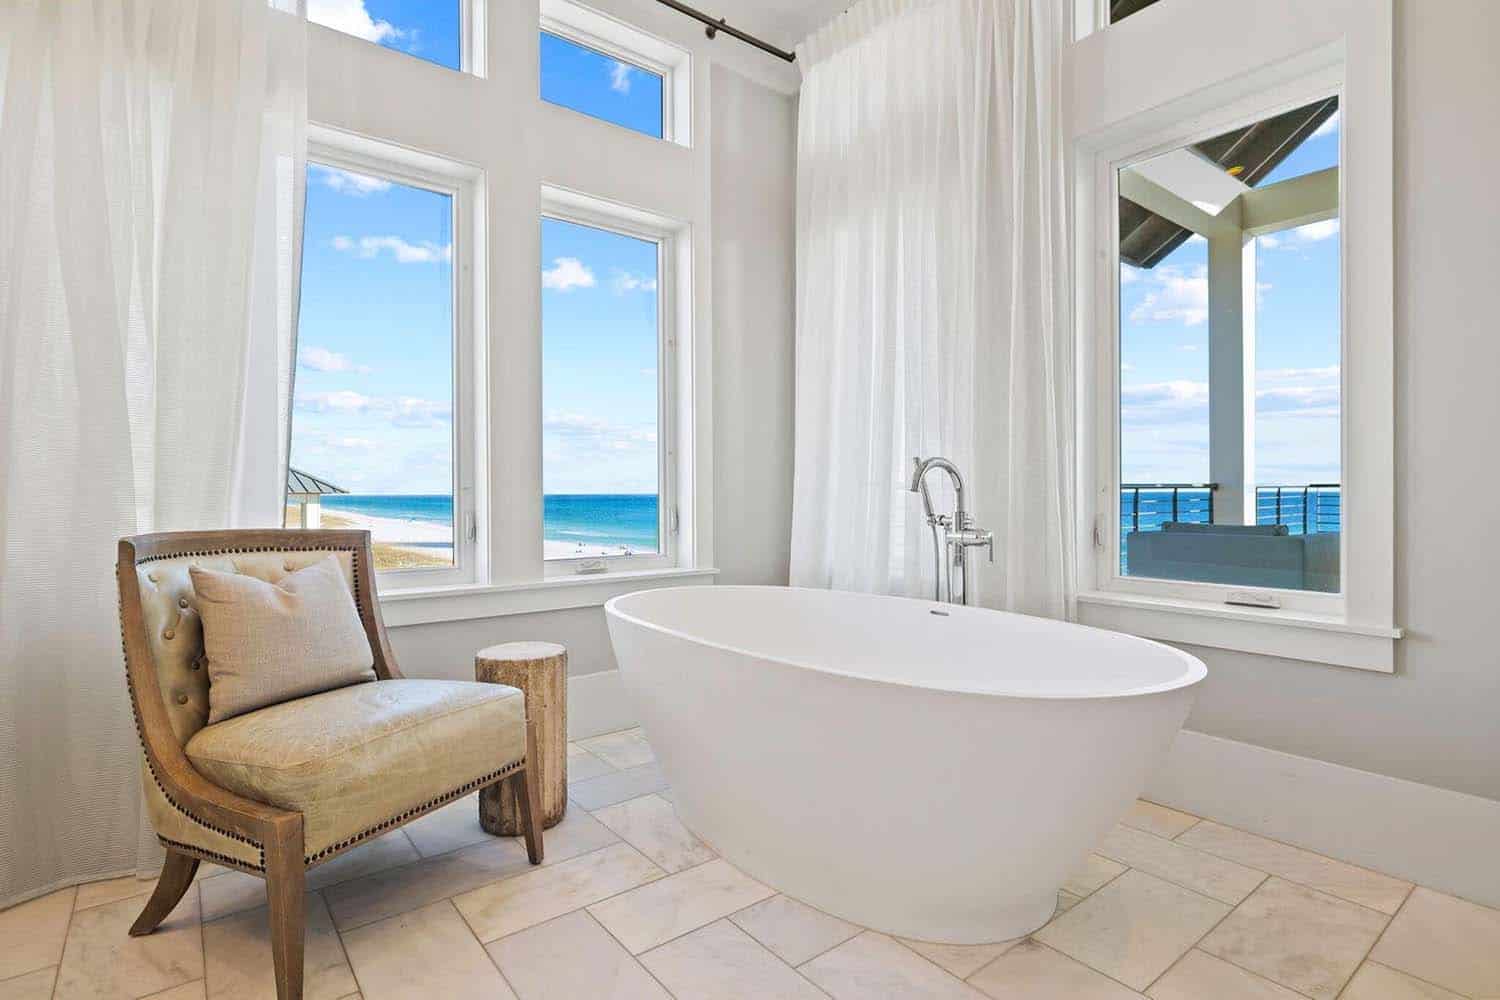 beach-style-bathroom-with-a-freestanding-tub